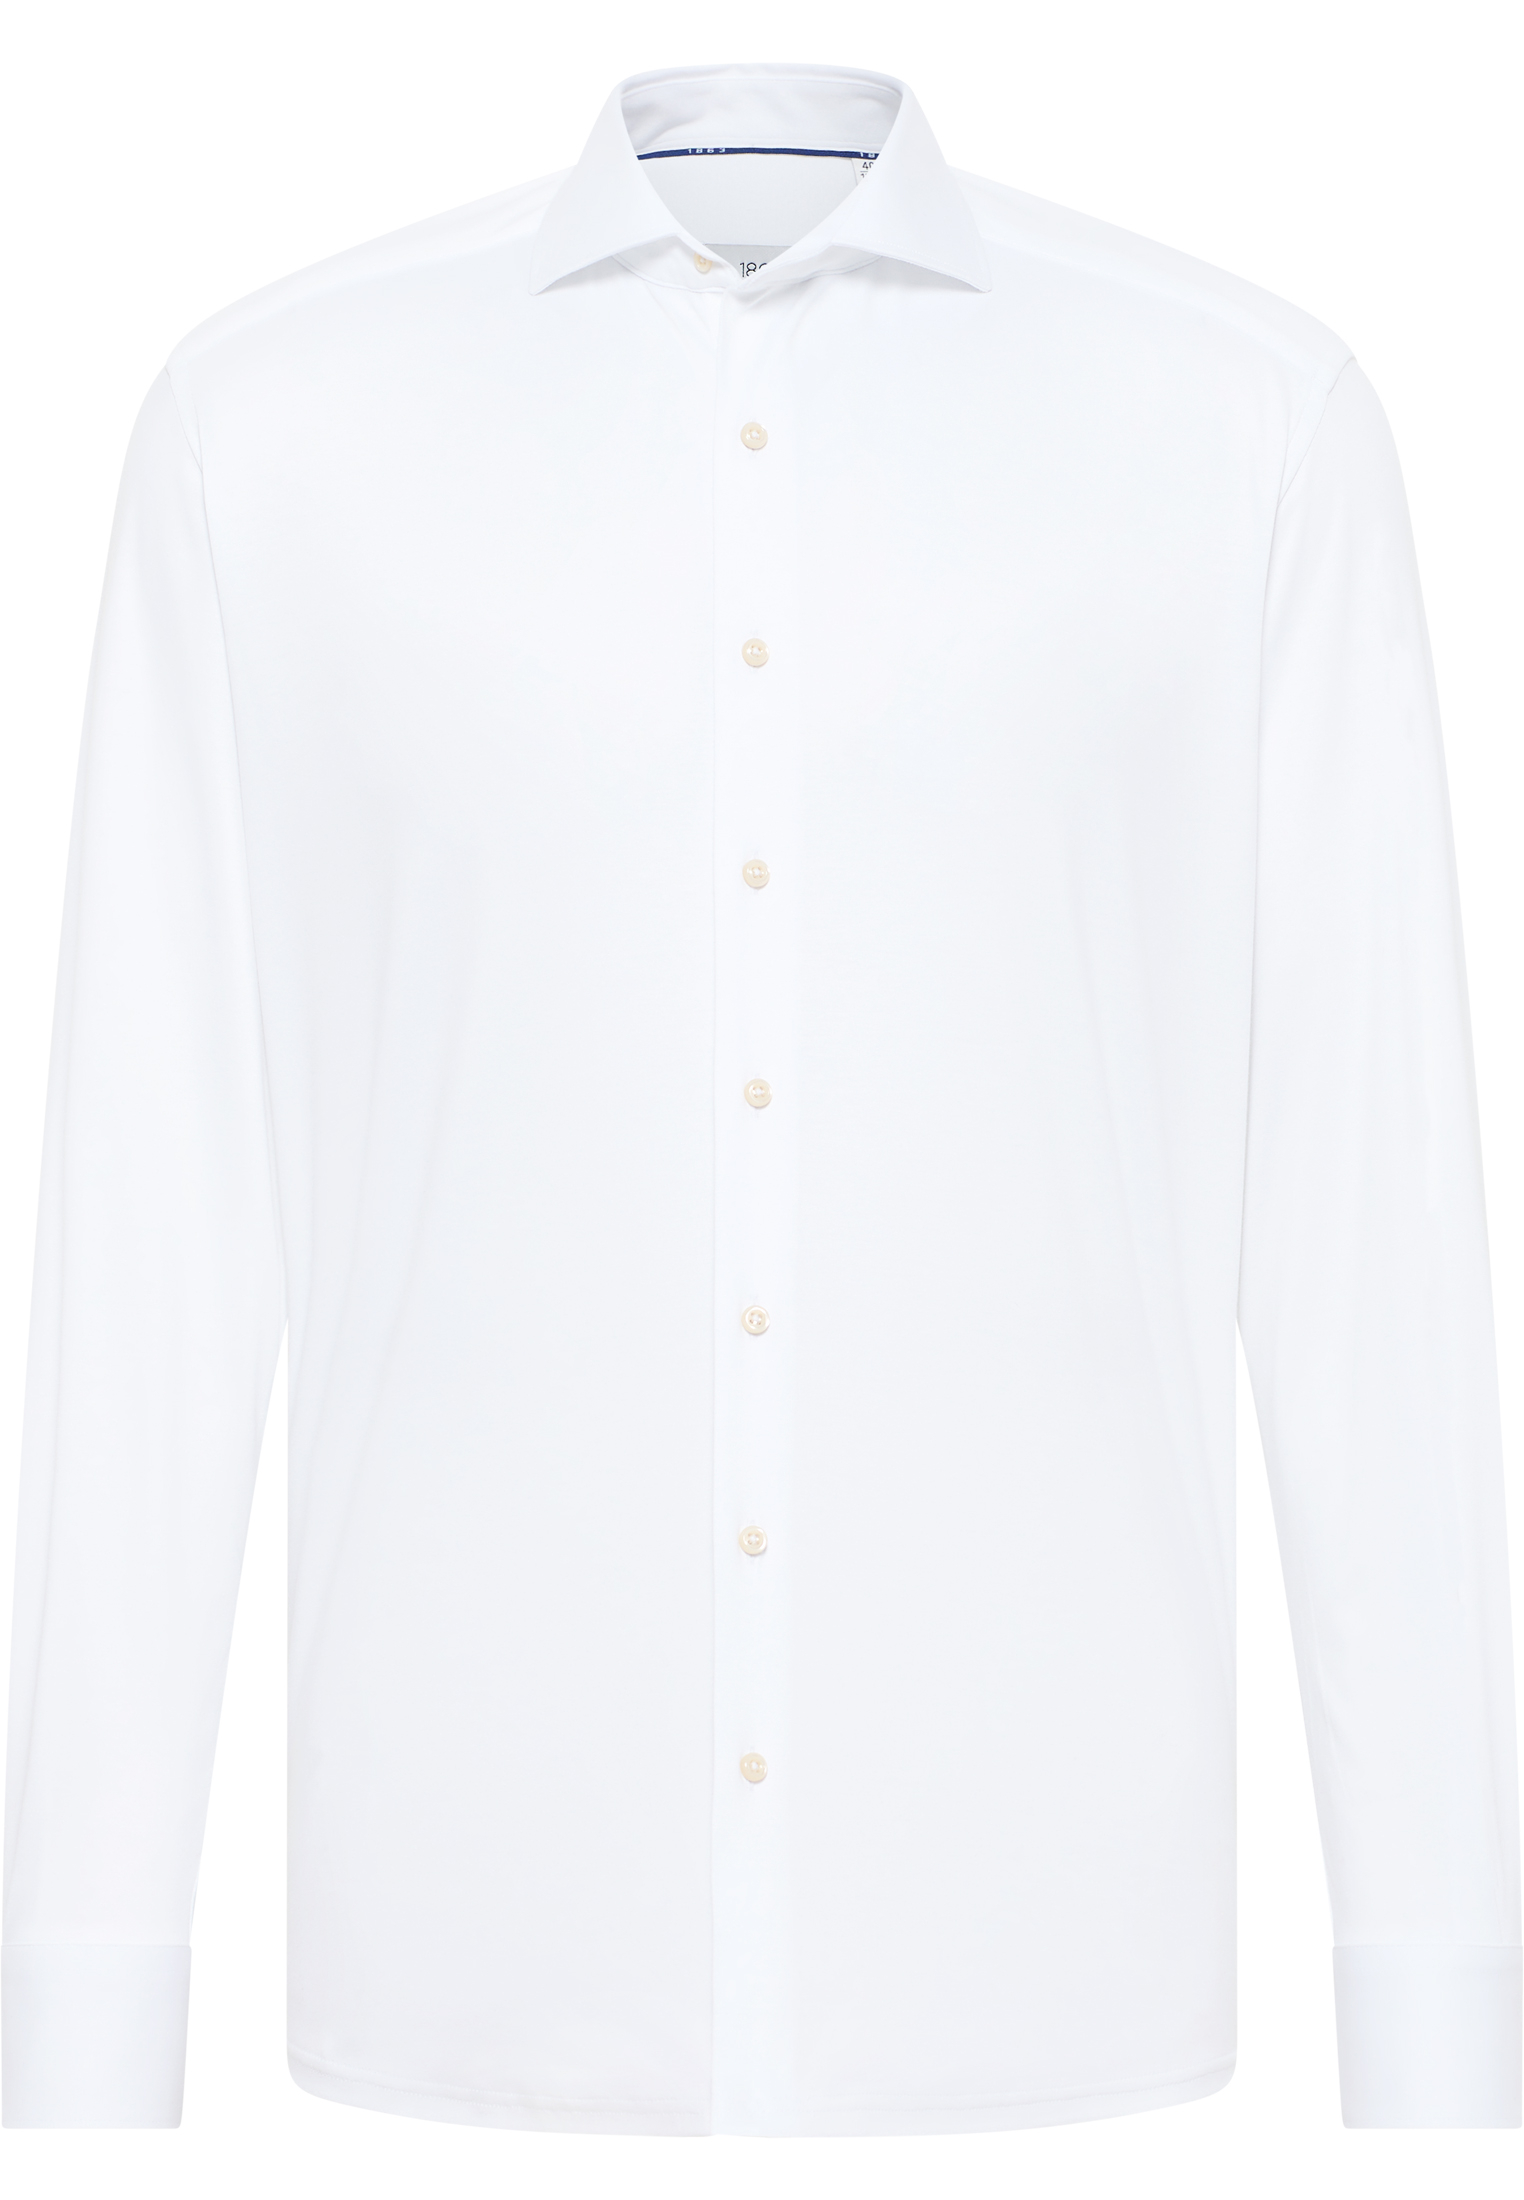 COMFORT FIT Jersey Shirt in weiß unifarben